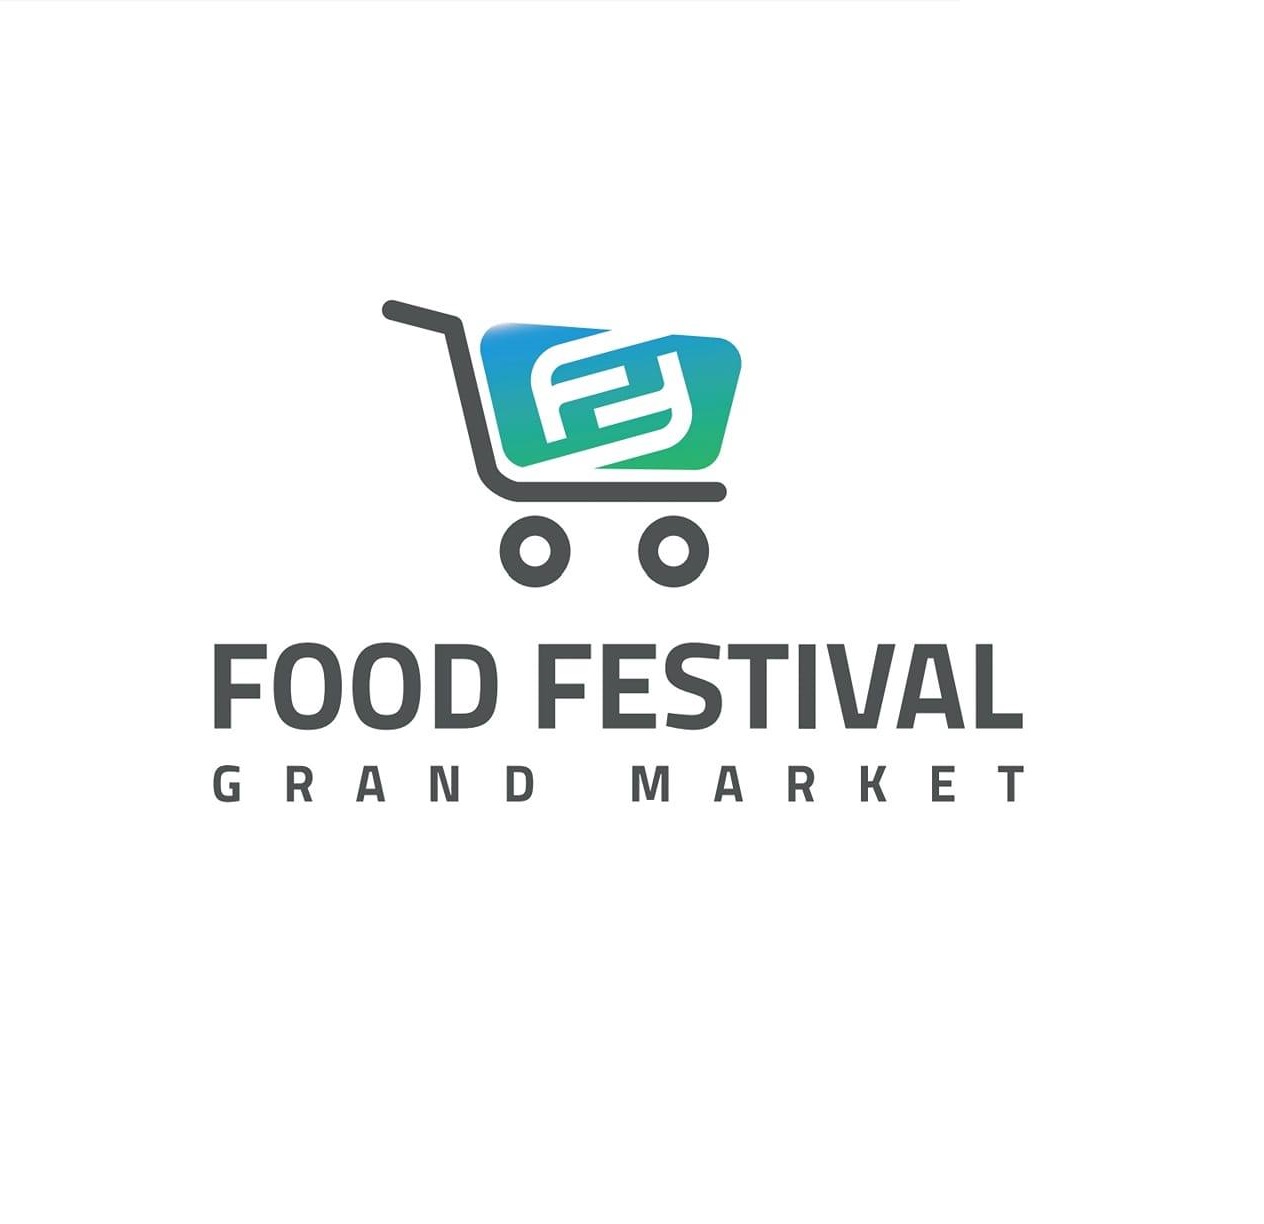 Food Festival Grand Market